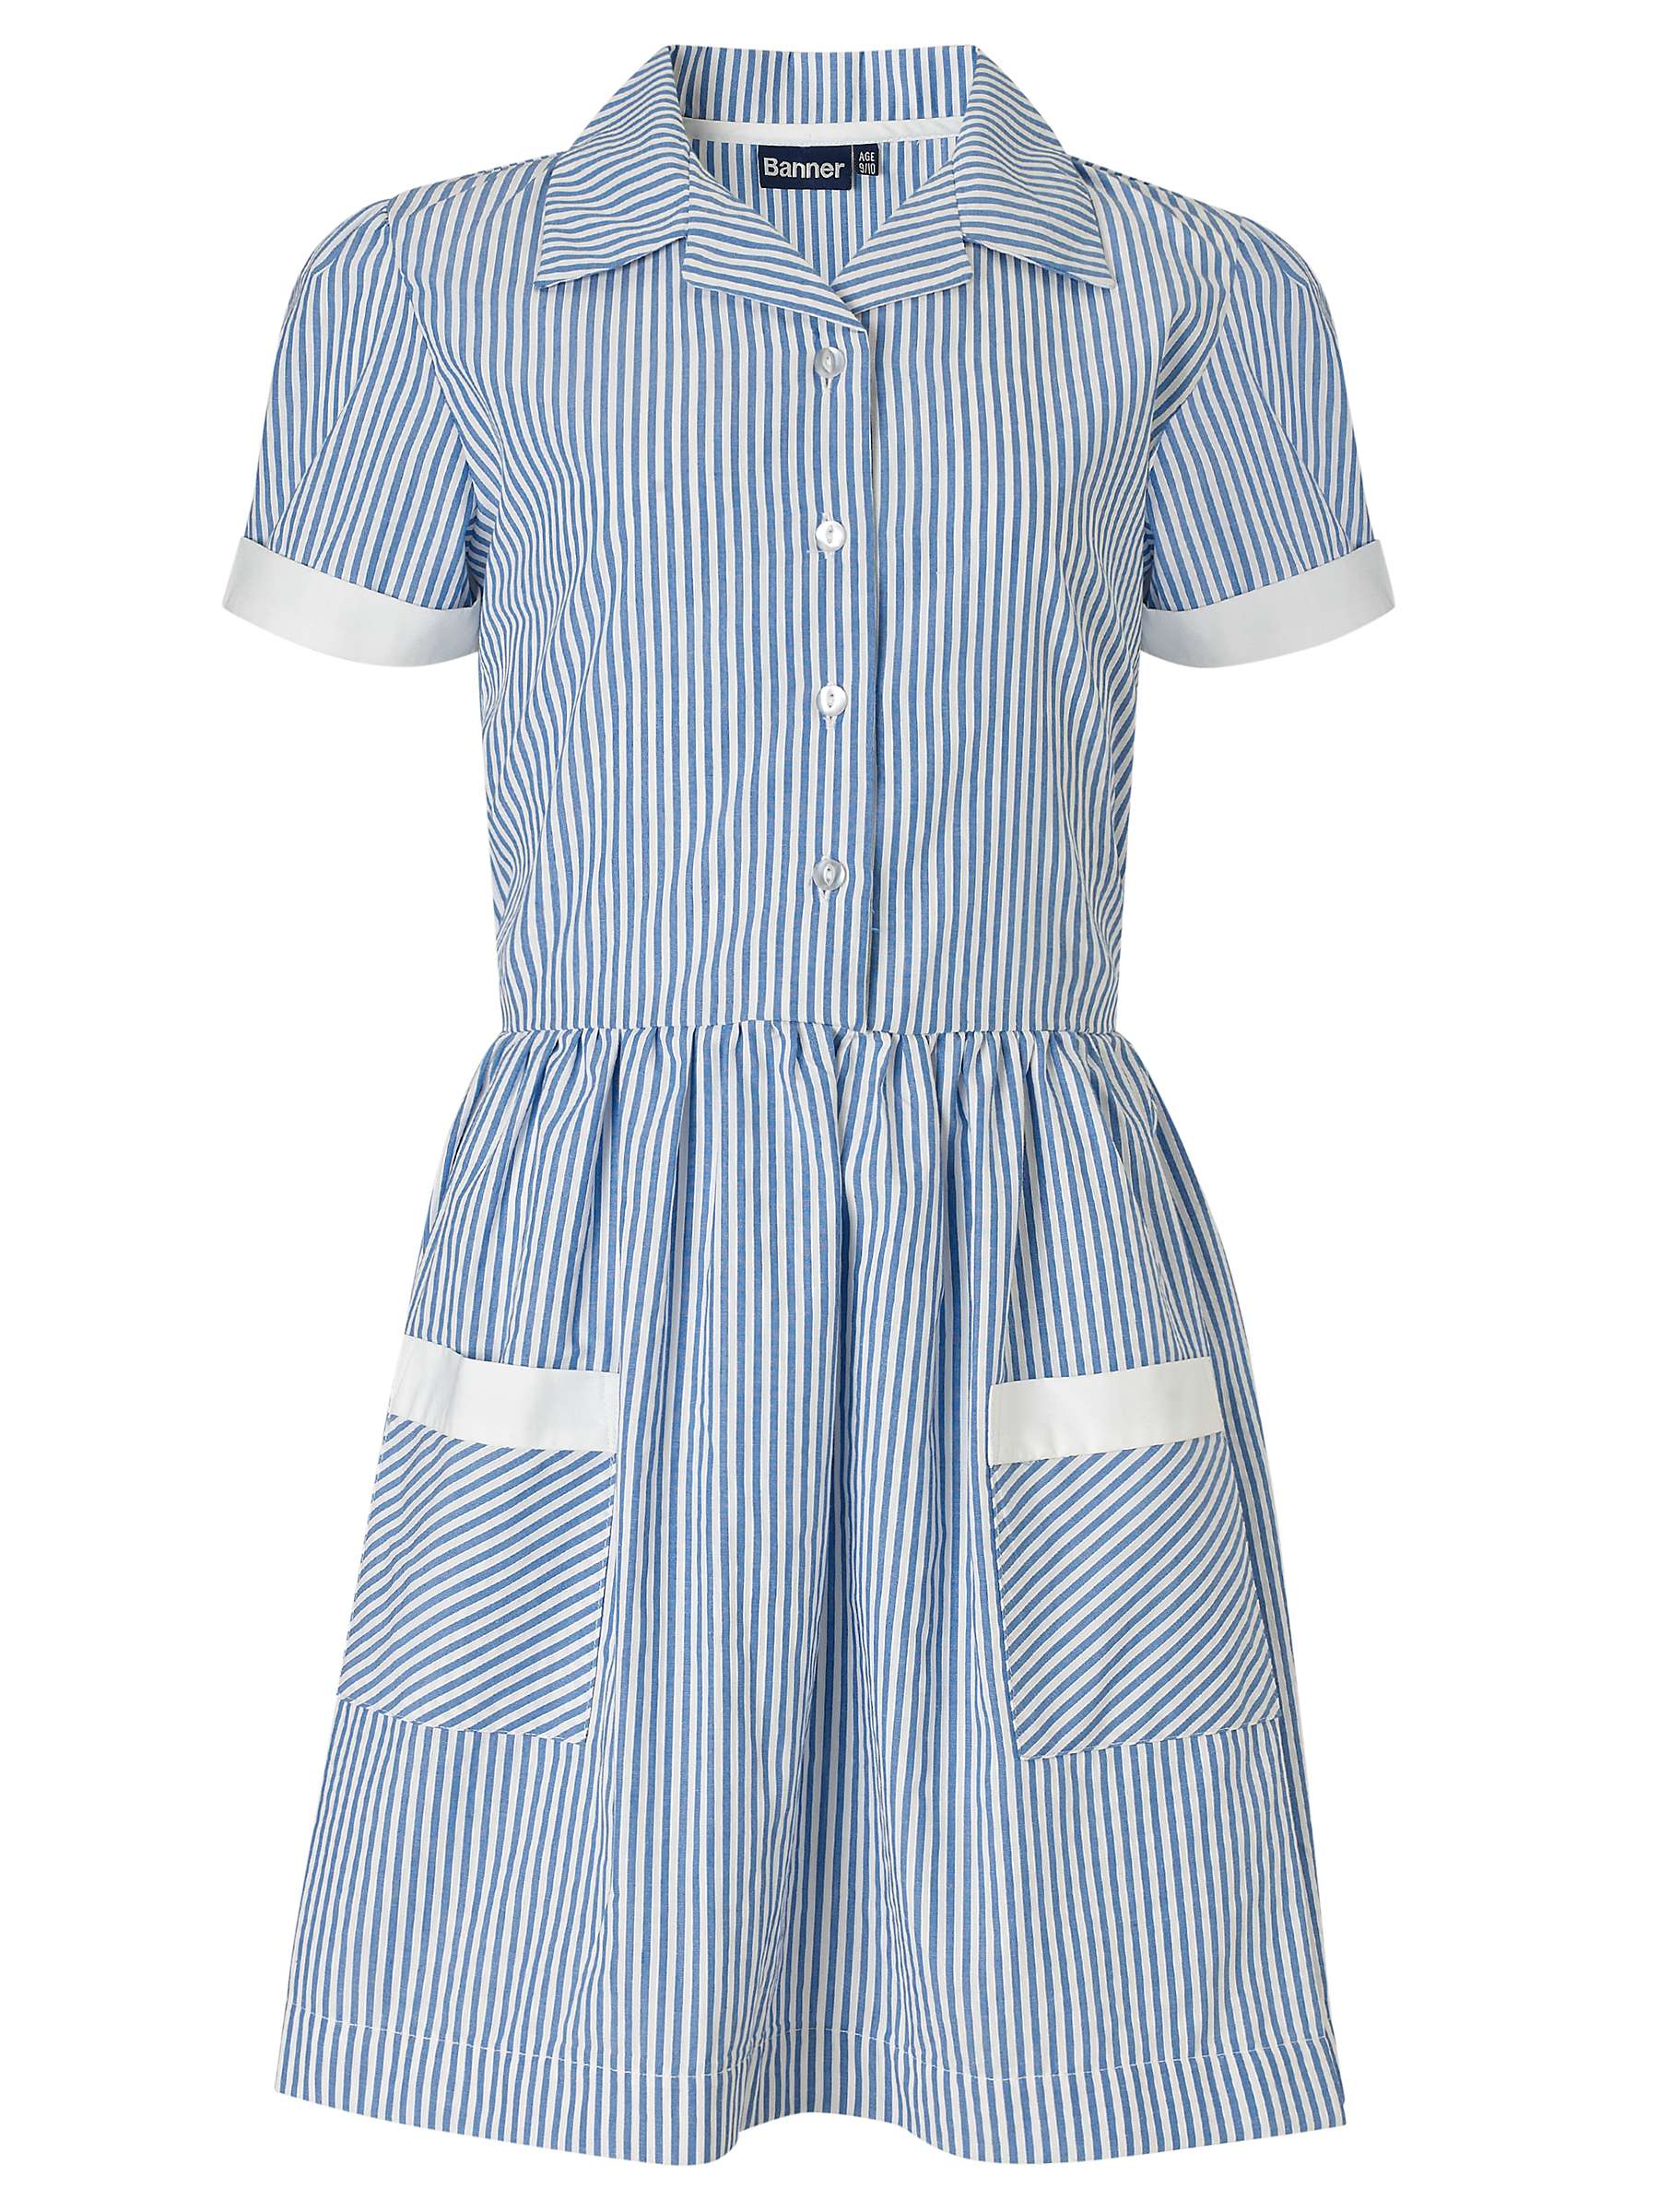 Buy School Girls' Summer Dress, Blue/White Online at johnlewis.com